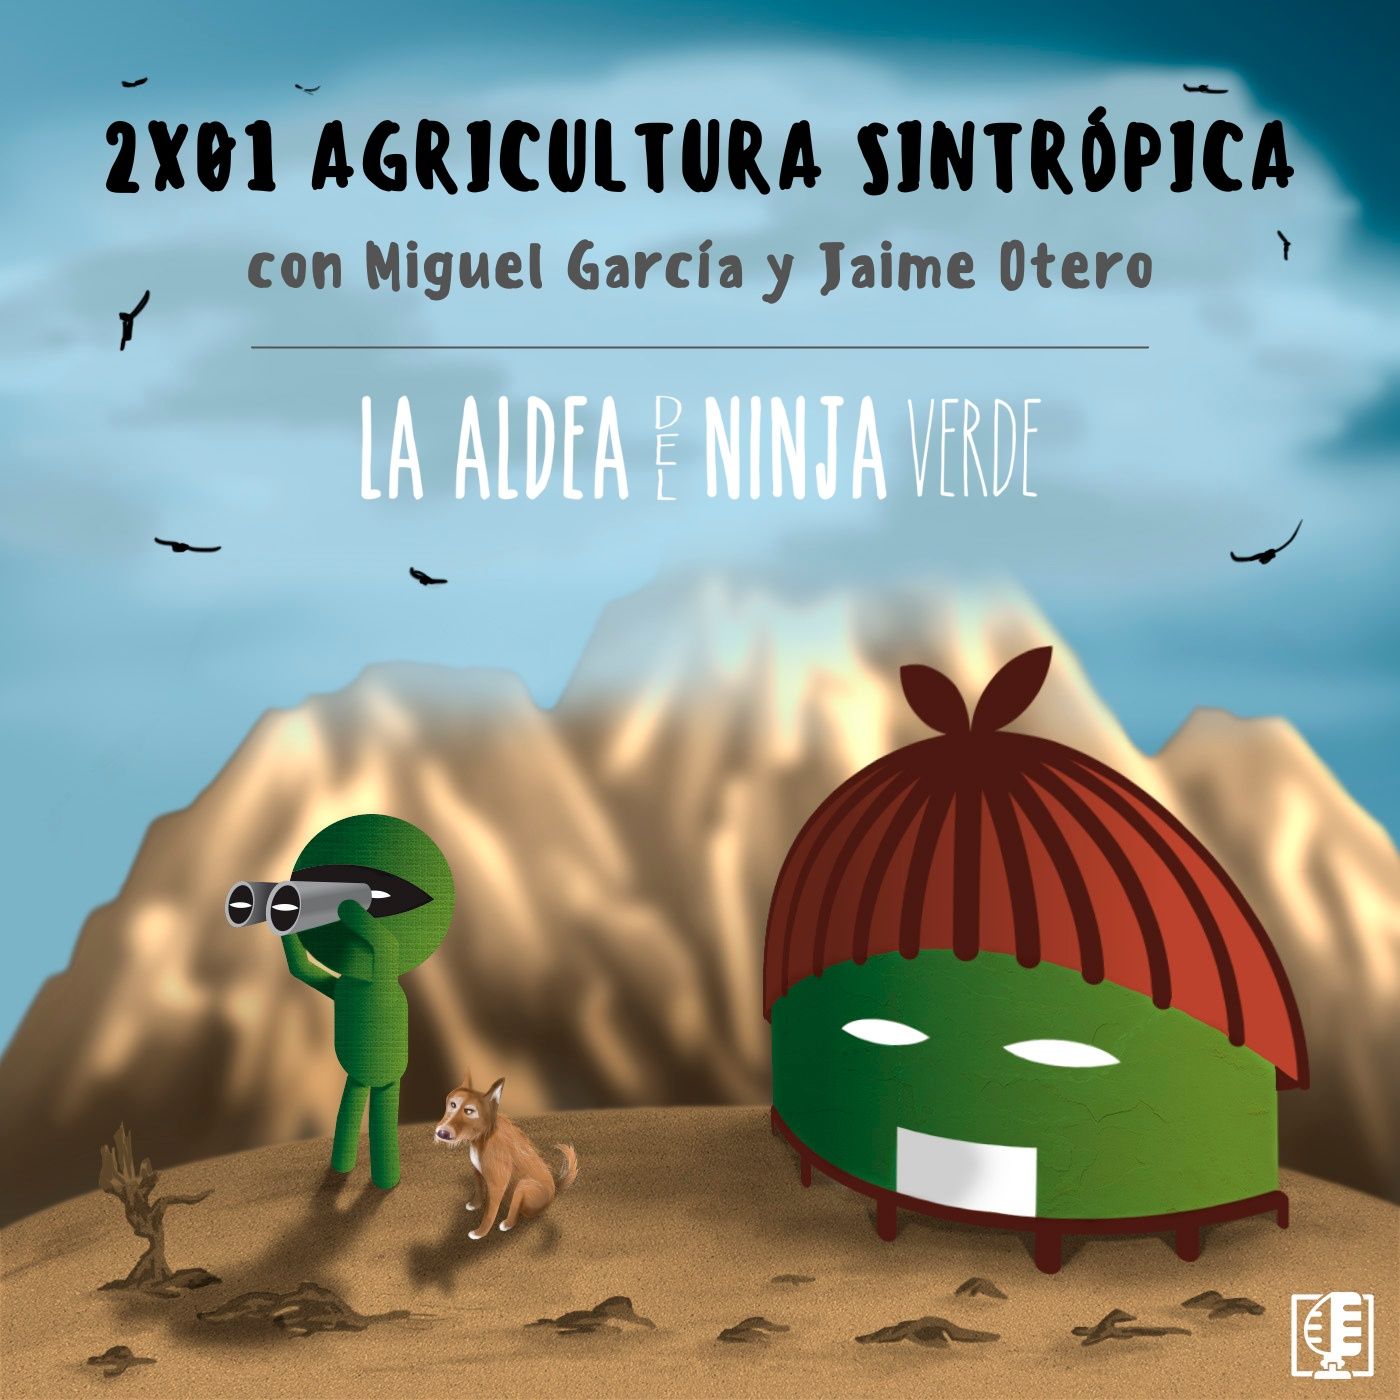 Agricultura Sintrópica #11